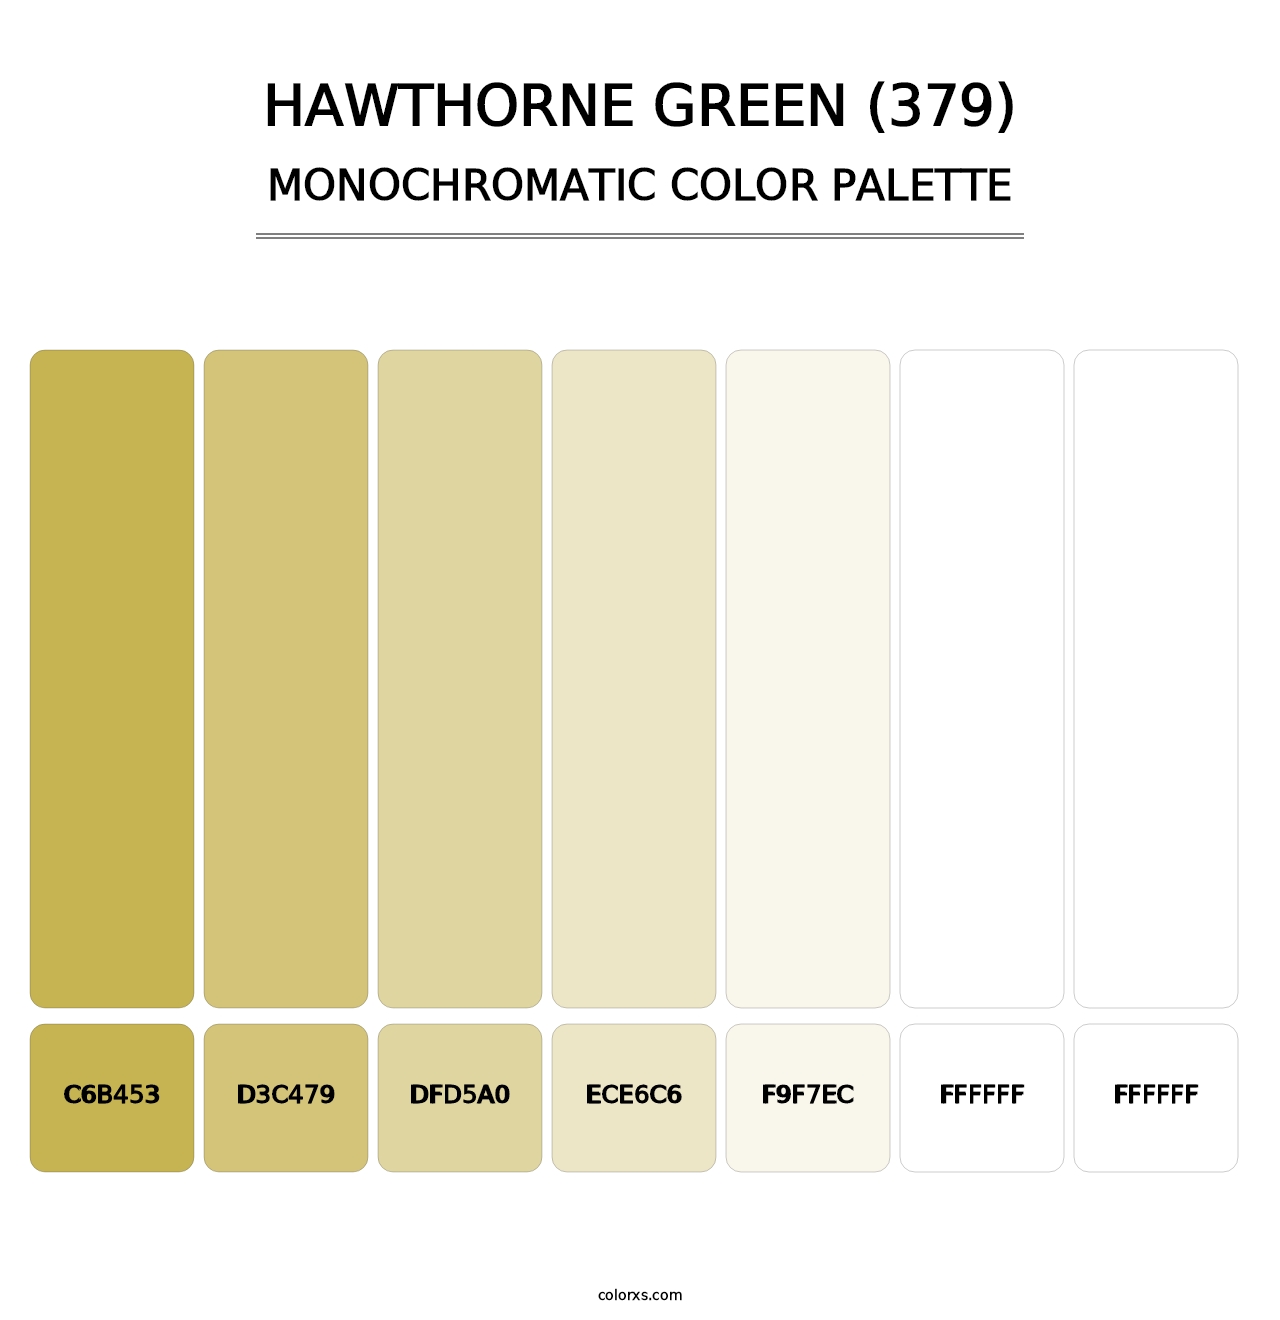 Hawthorne Green (379) - Monochromatic Color Palette